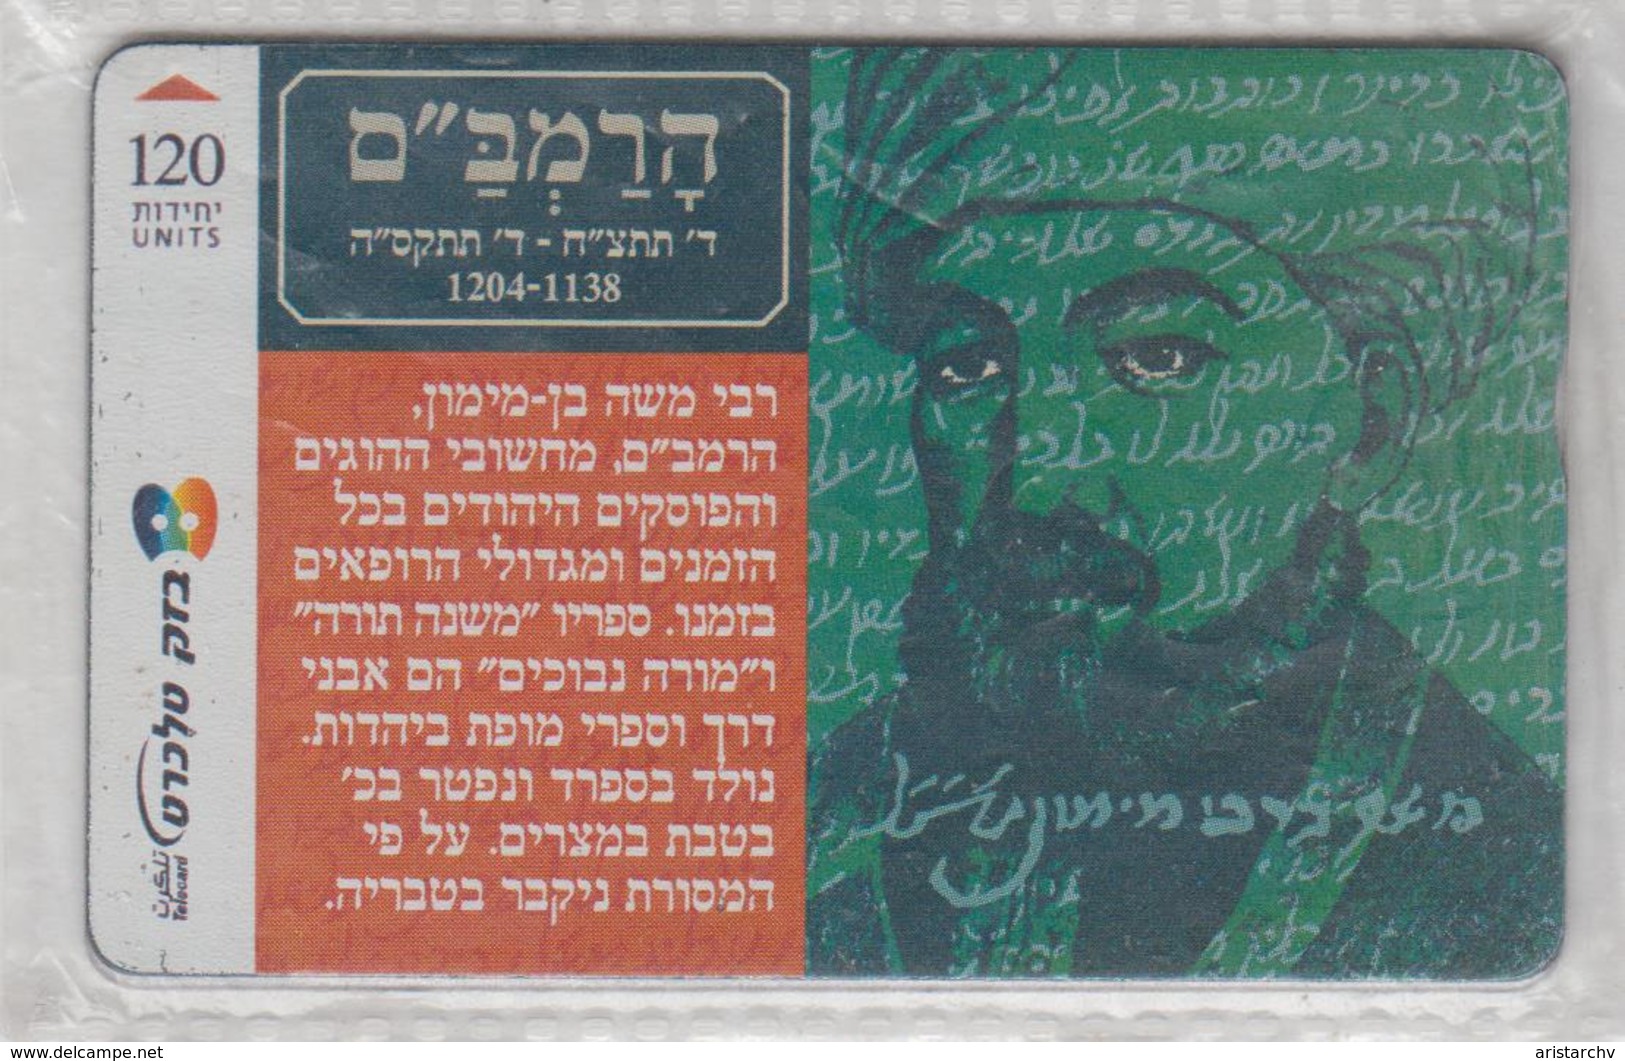 ISRAEL 2002 RAMBAM MAIMONIDES 120 UNITS USED PHONE CARD - Israel